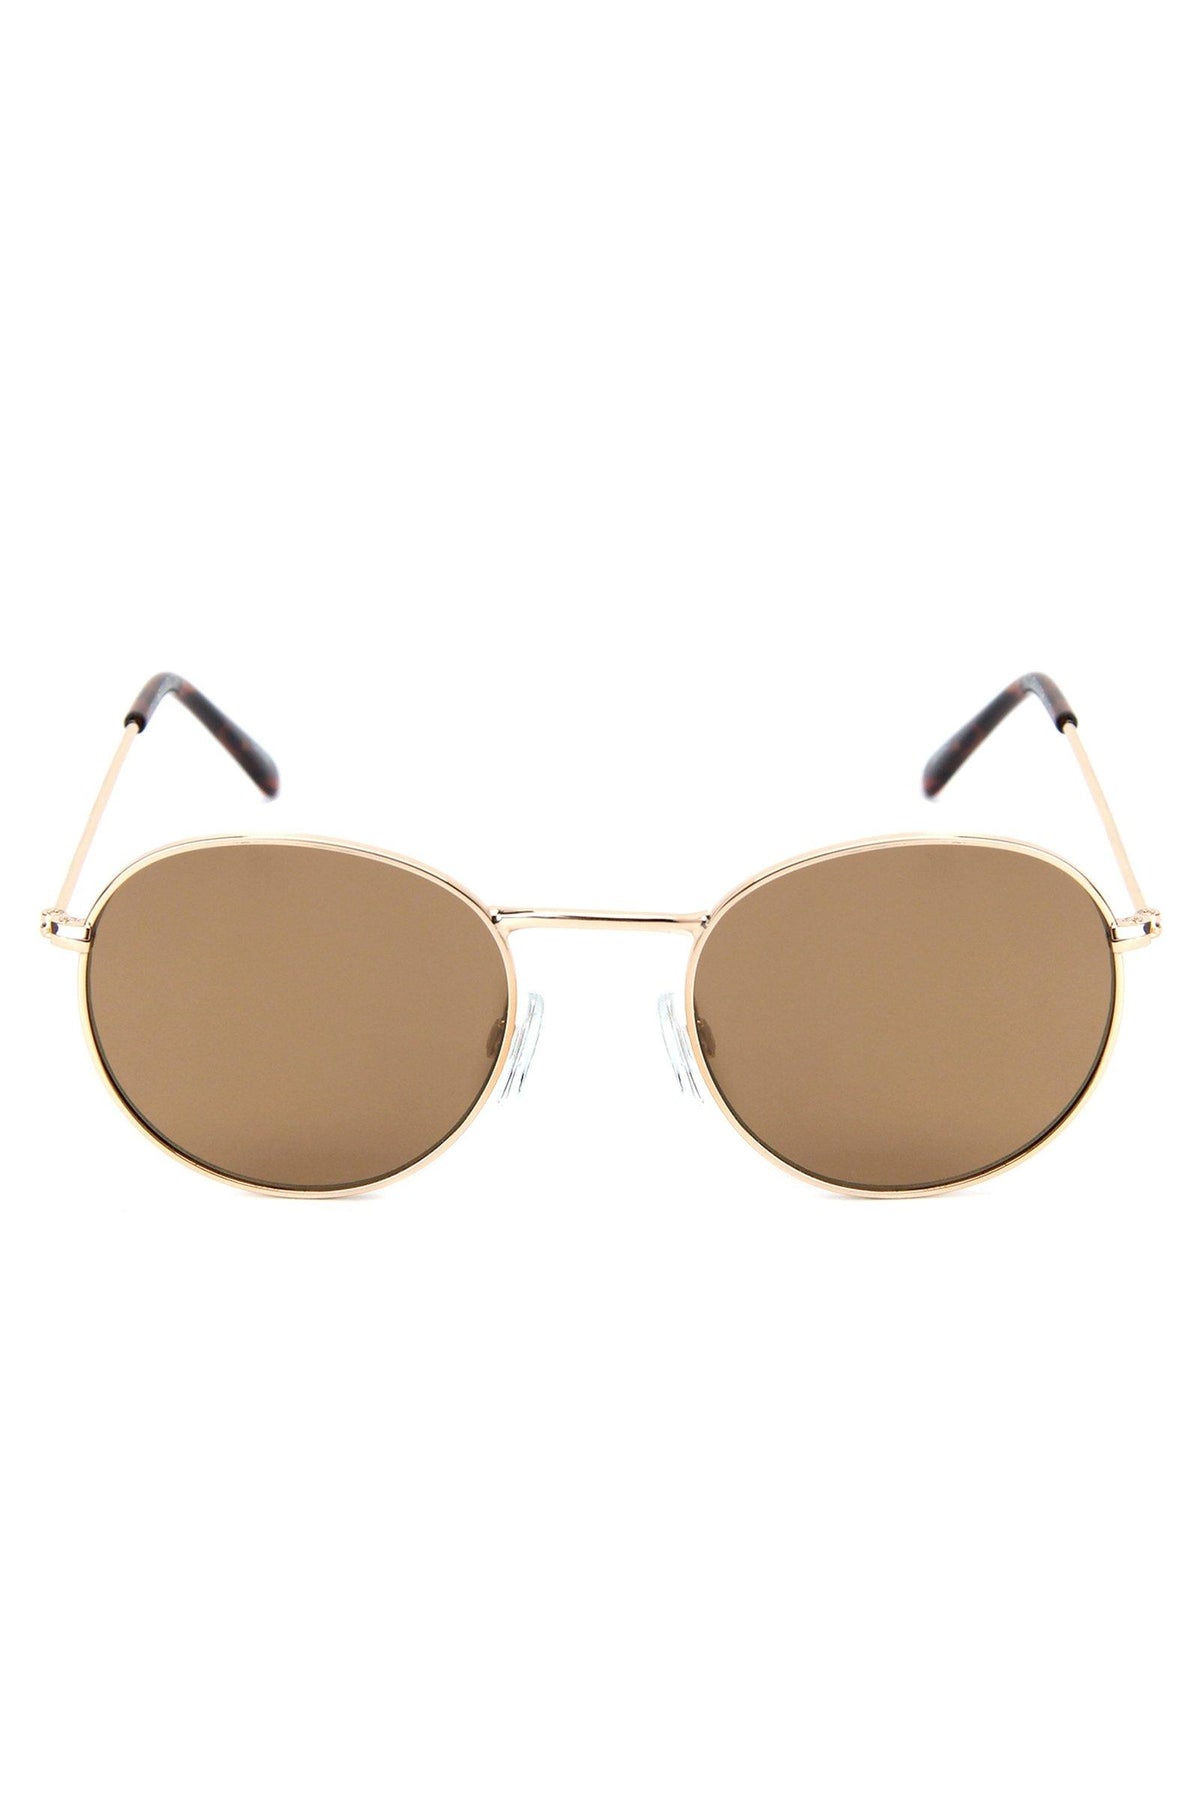 Lucky Brand Colton Wire Sunglasses Gold